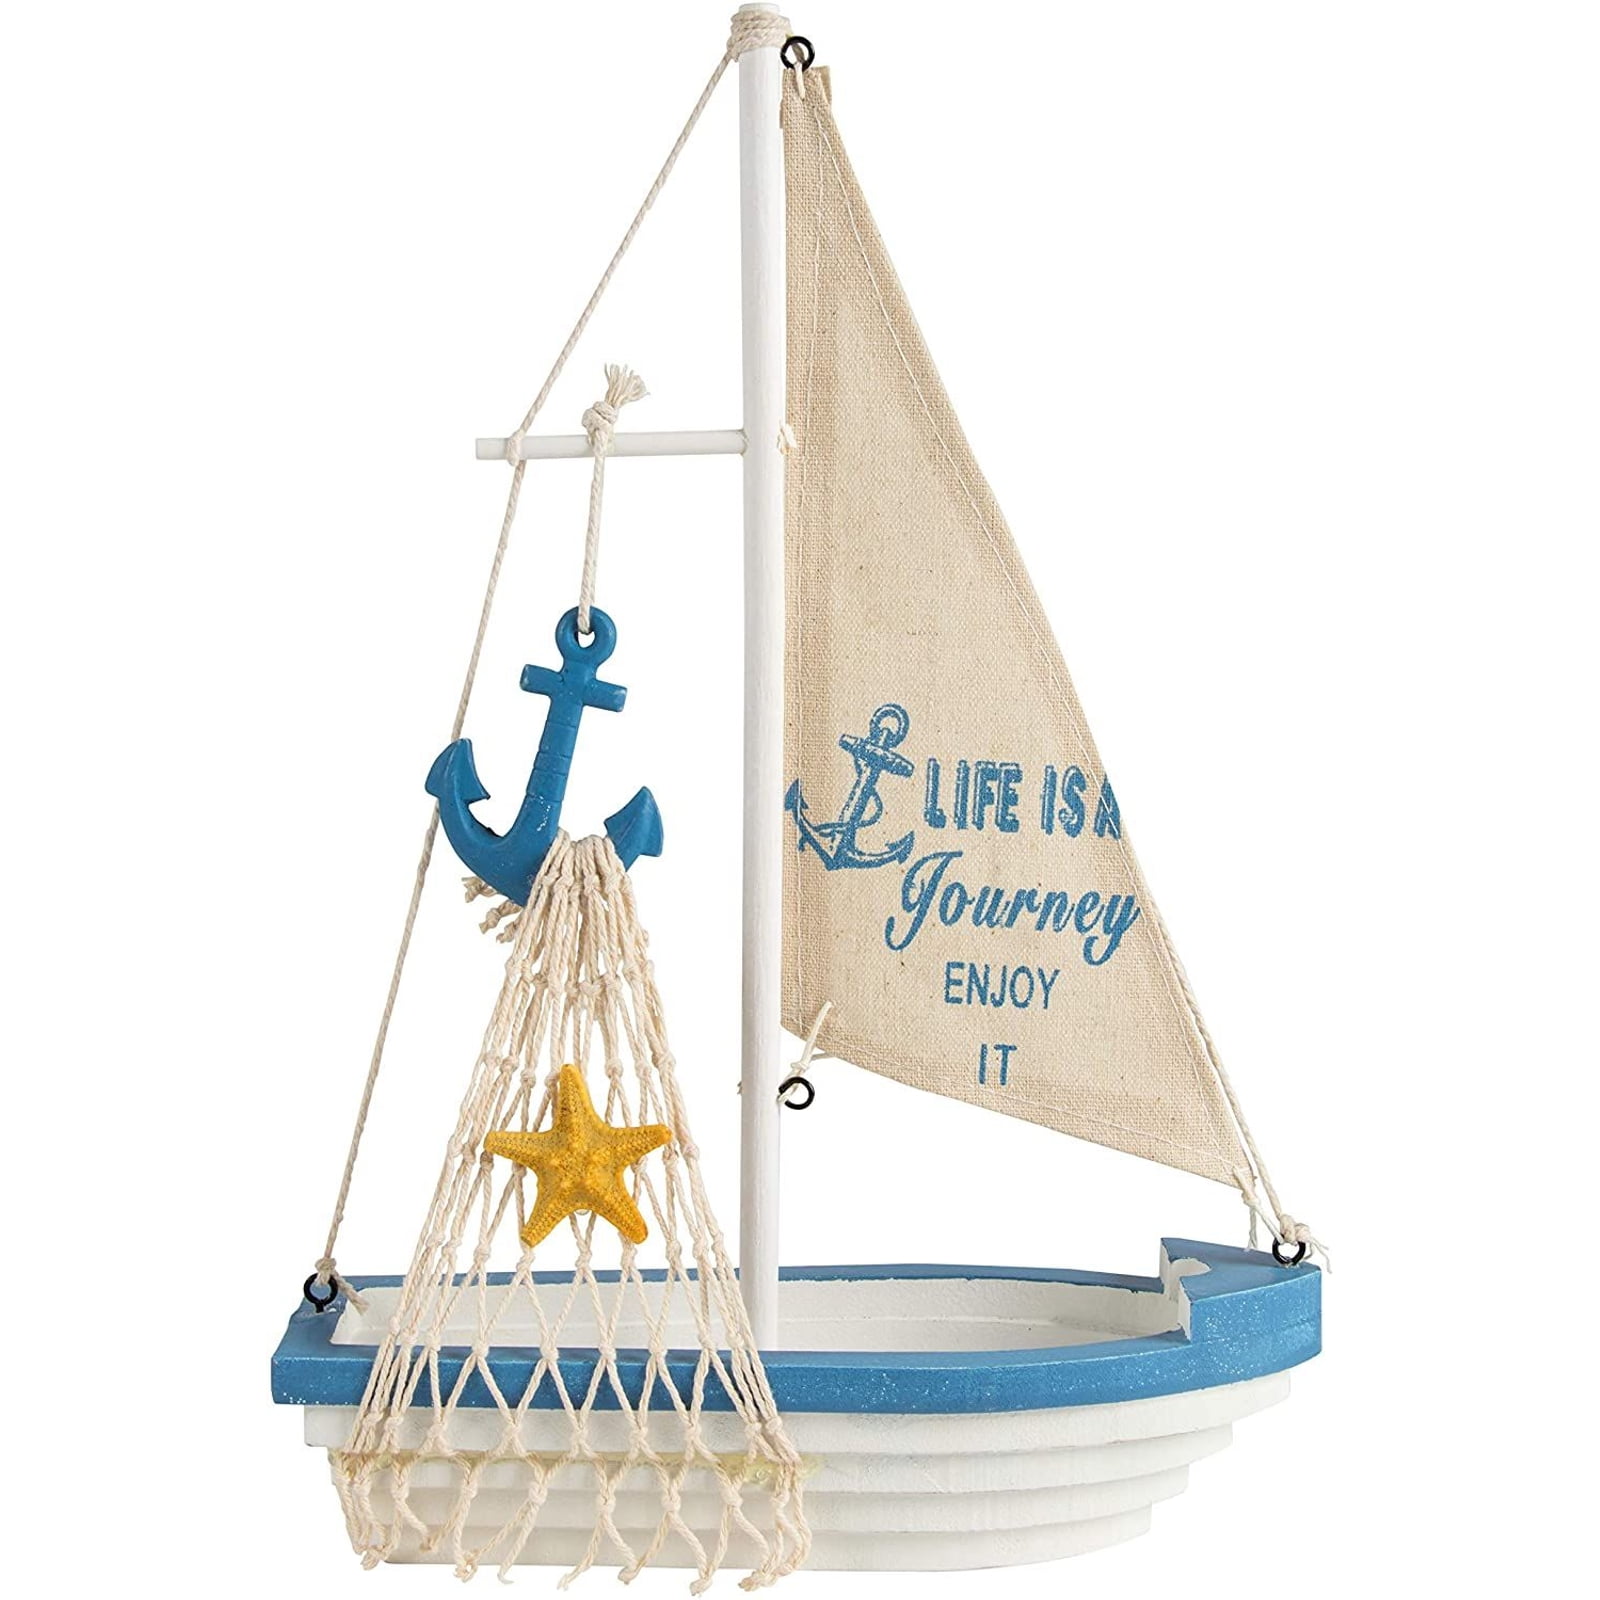 Details about   Nautical Wooden Sailboat Decor Sailing Boat Model Display Sail Boat Decor 